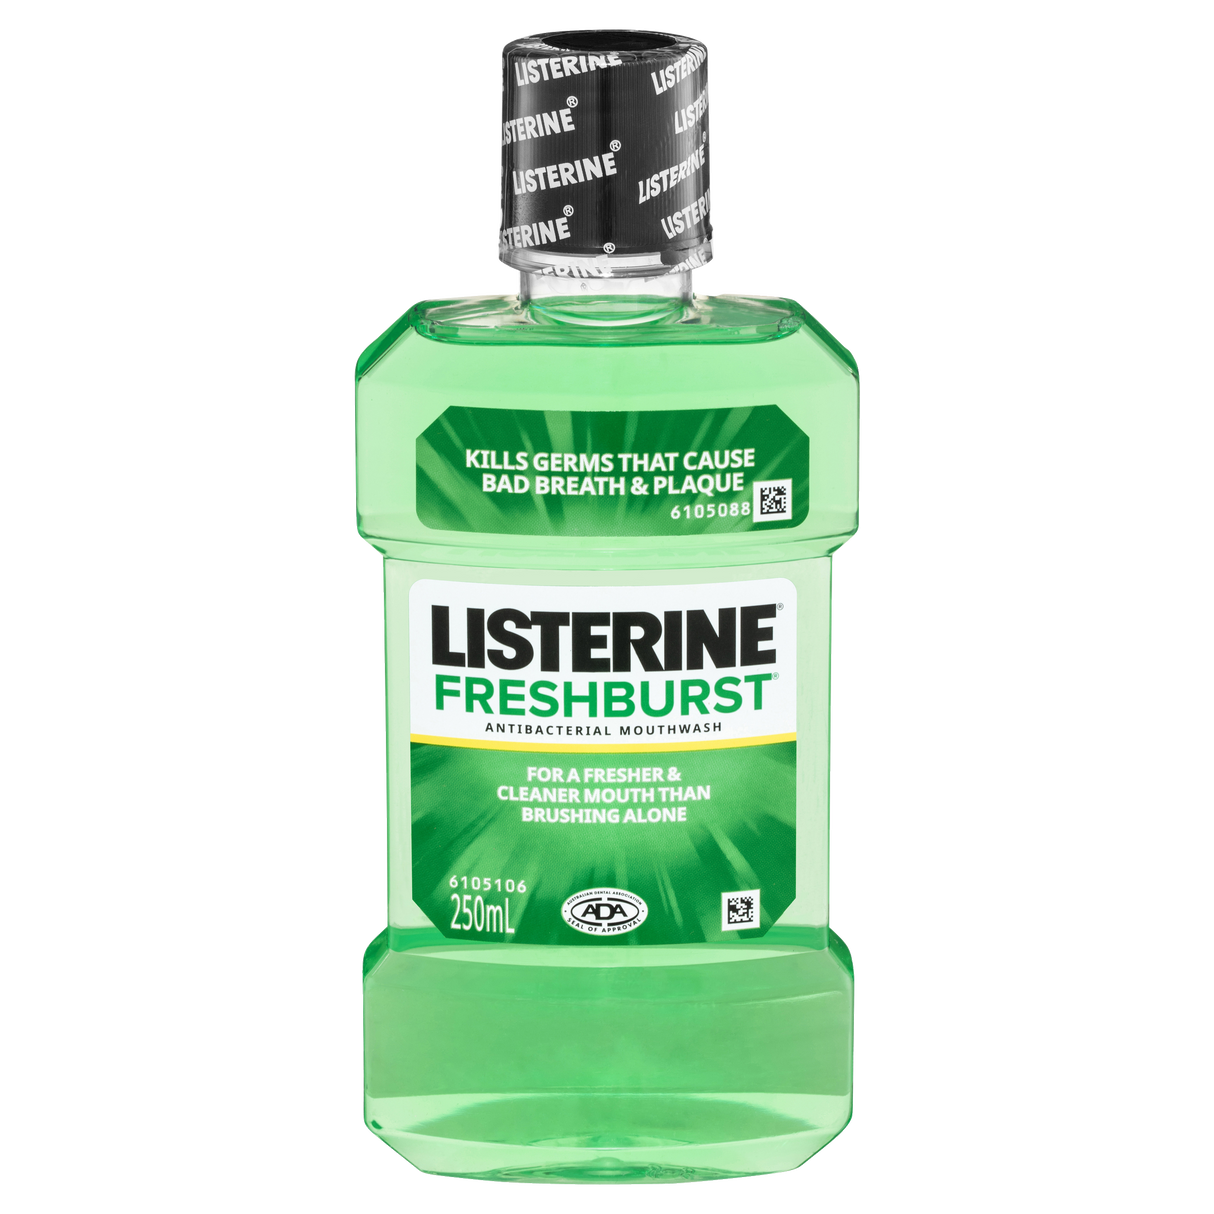 Listerine Freshburst Anti-bacterial Mouthwash 250ml